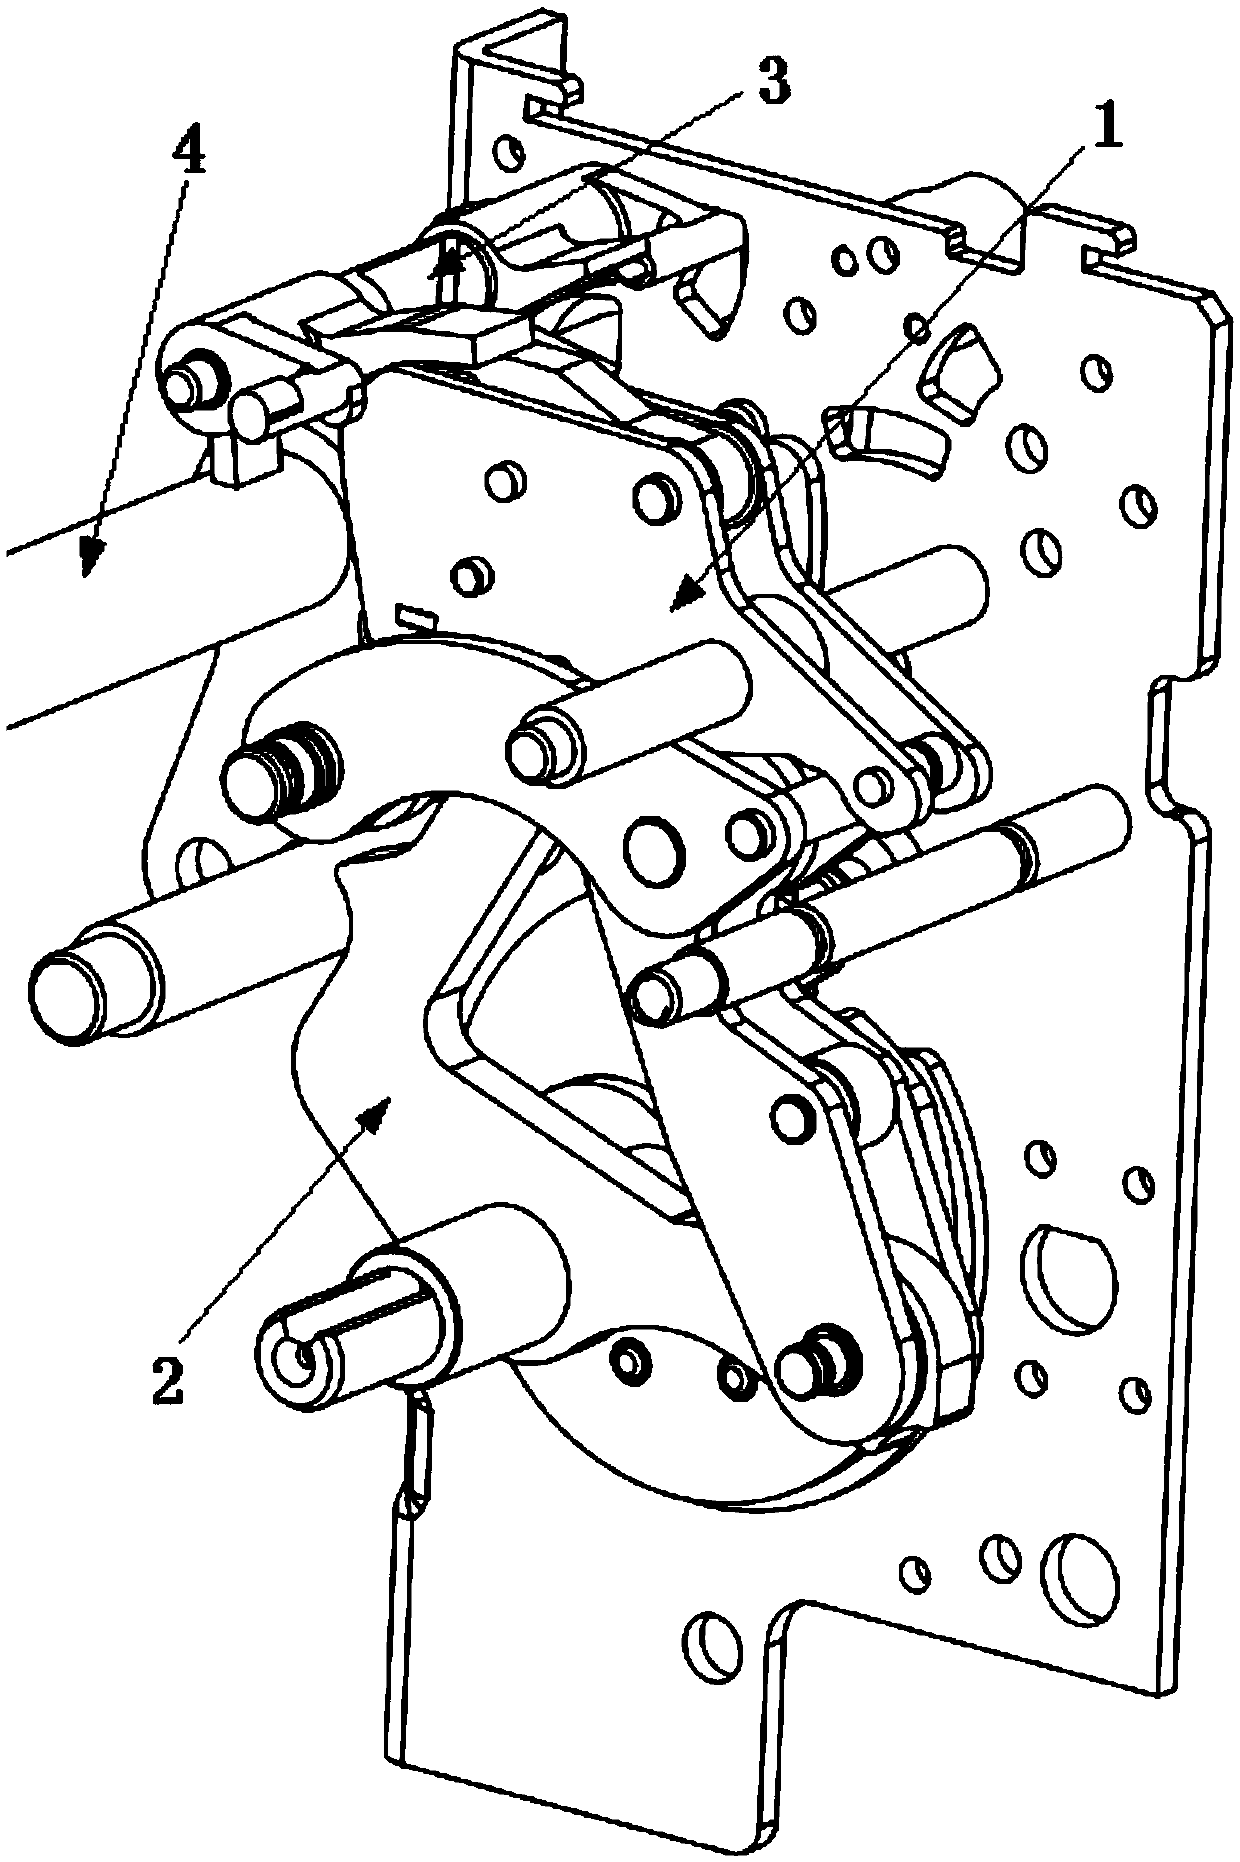 Current-limiting operating mechanism of circuit breaker